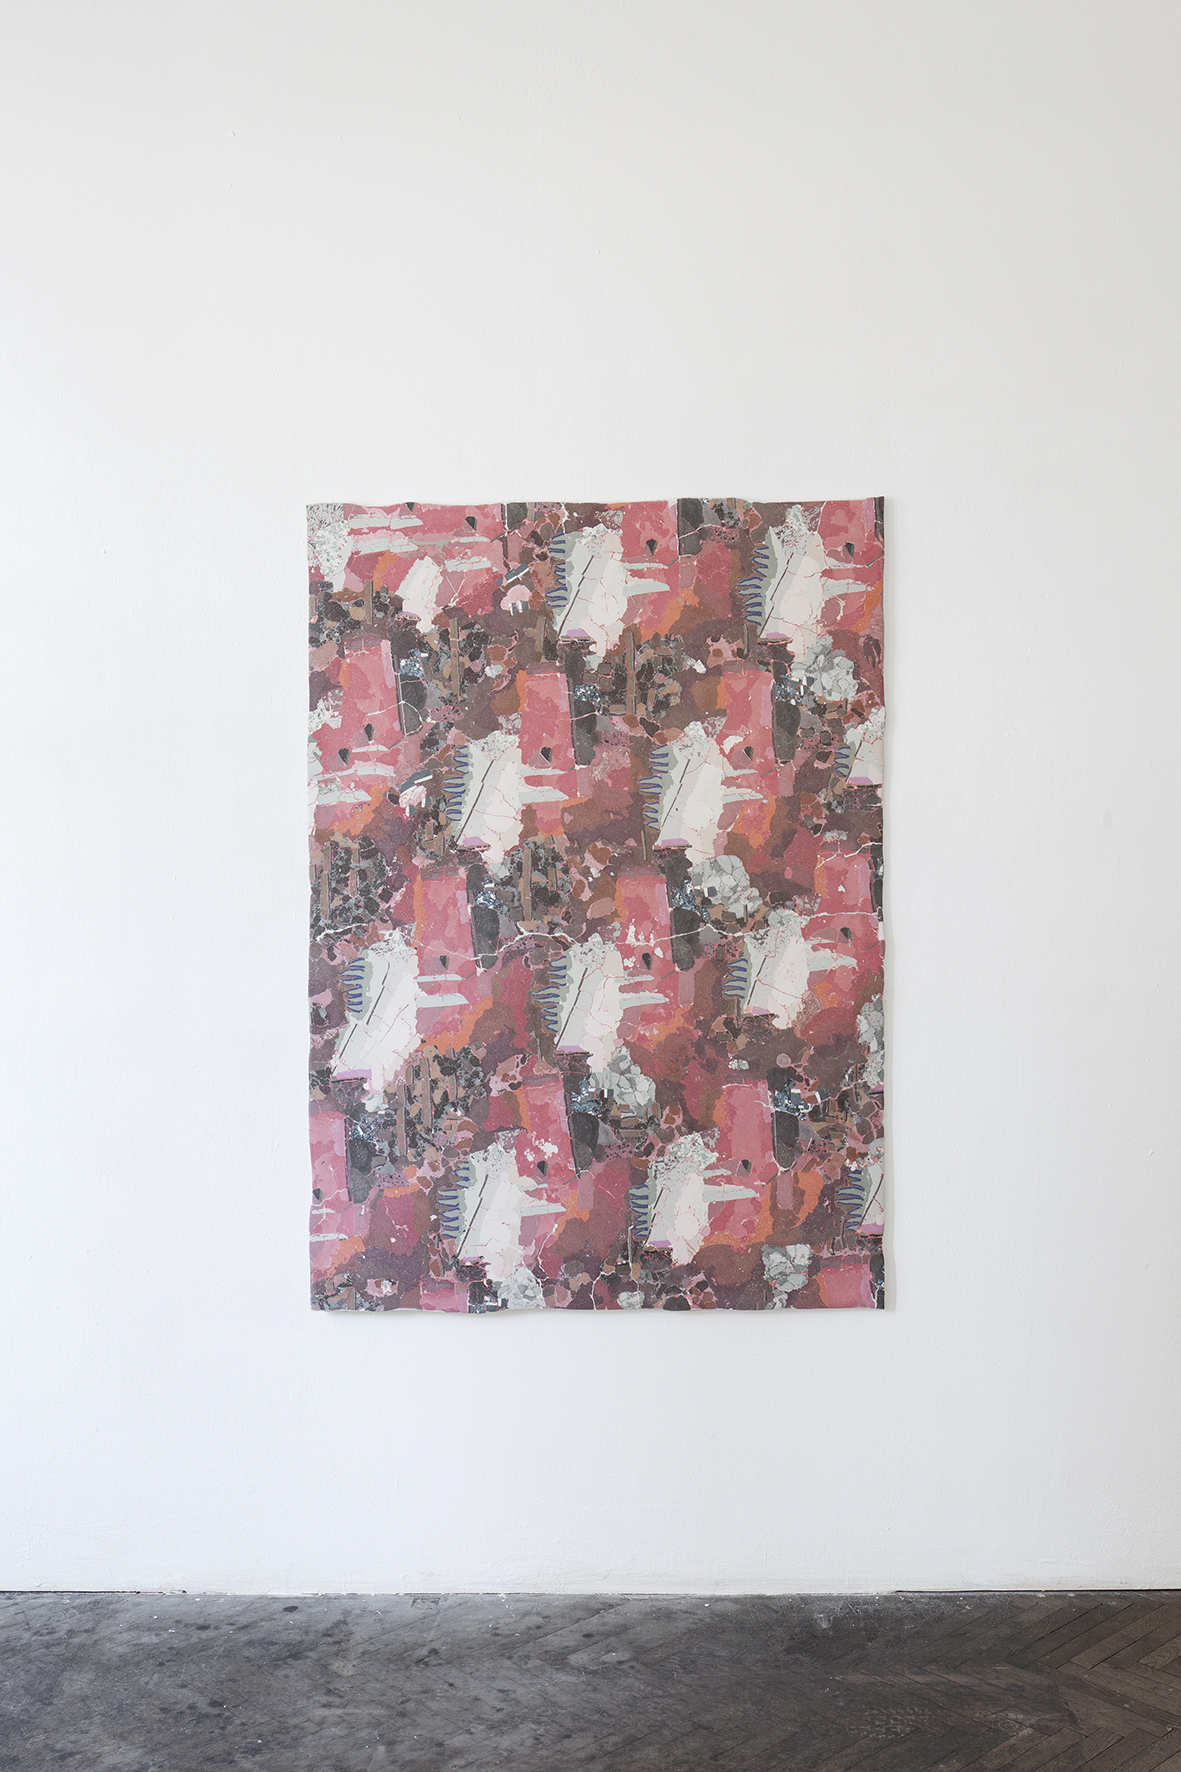 Heti Prack, World Fire, 2021, 141 x 100 cm, Gypsum, pigments, bone glue